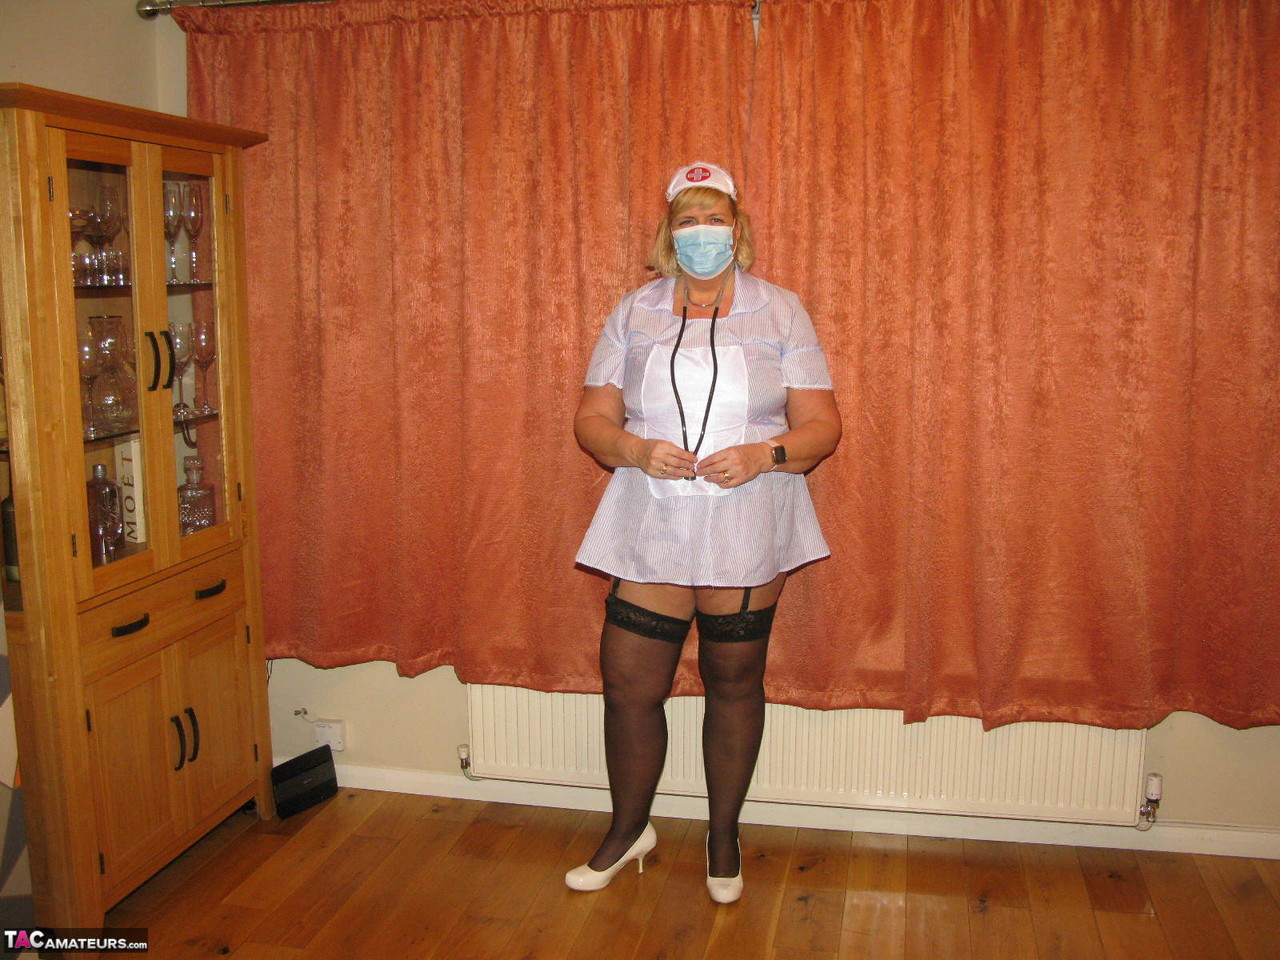 Fat nurse Chrissy Uk removes a surgical mask and uniform to model lingerie photo porno #424682136 | TAC Amateurs Pics, Chrissy Uk, Mature, porno mobile